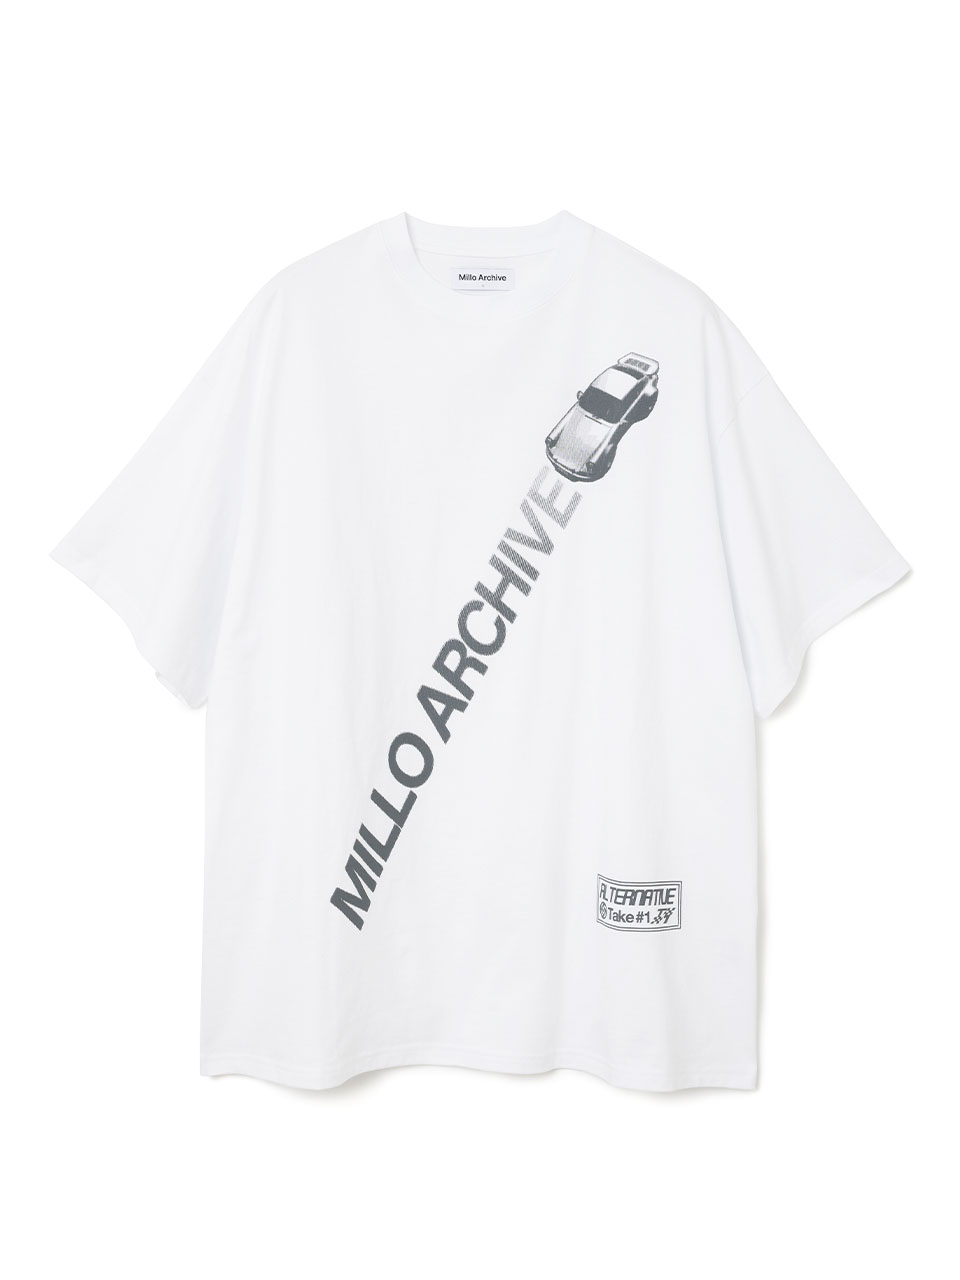 Car Race Archive T-shirts [White]